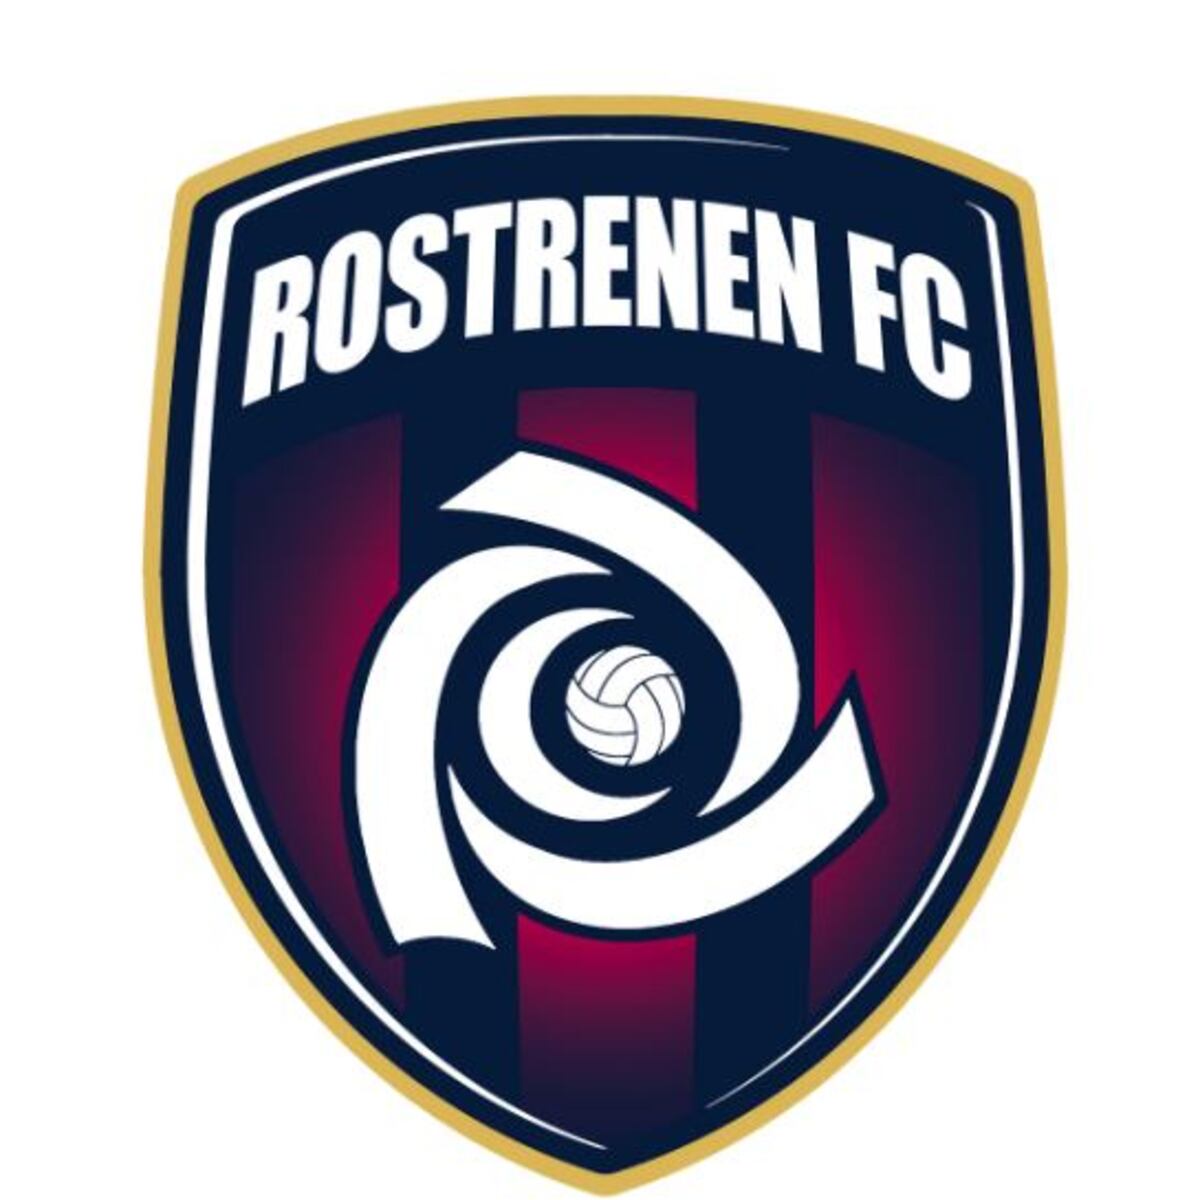 rostrenen-fc-22-football-club-facts